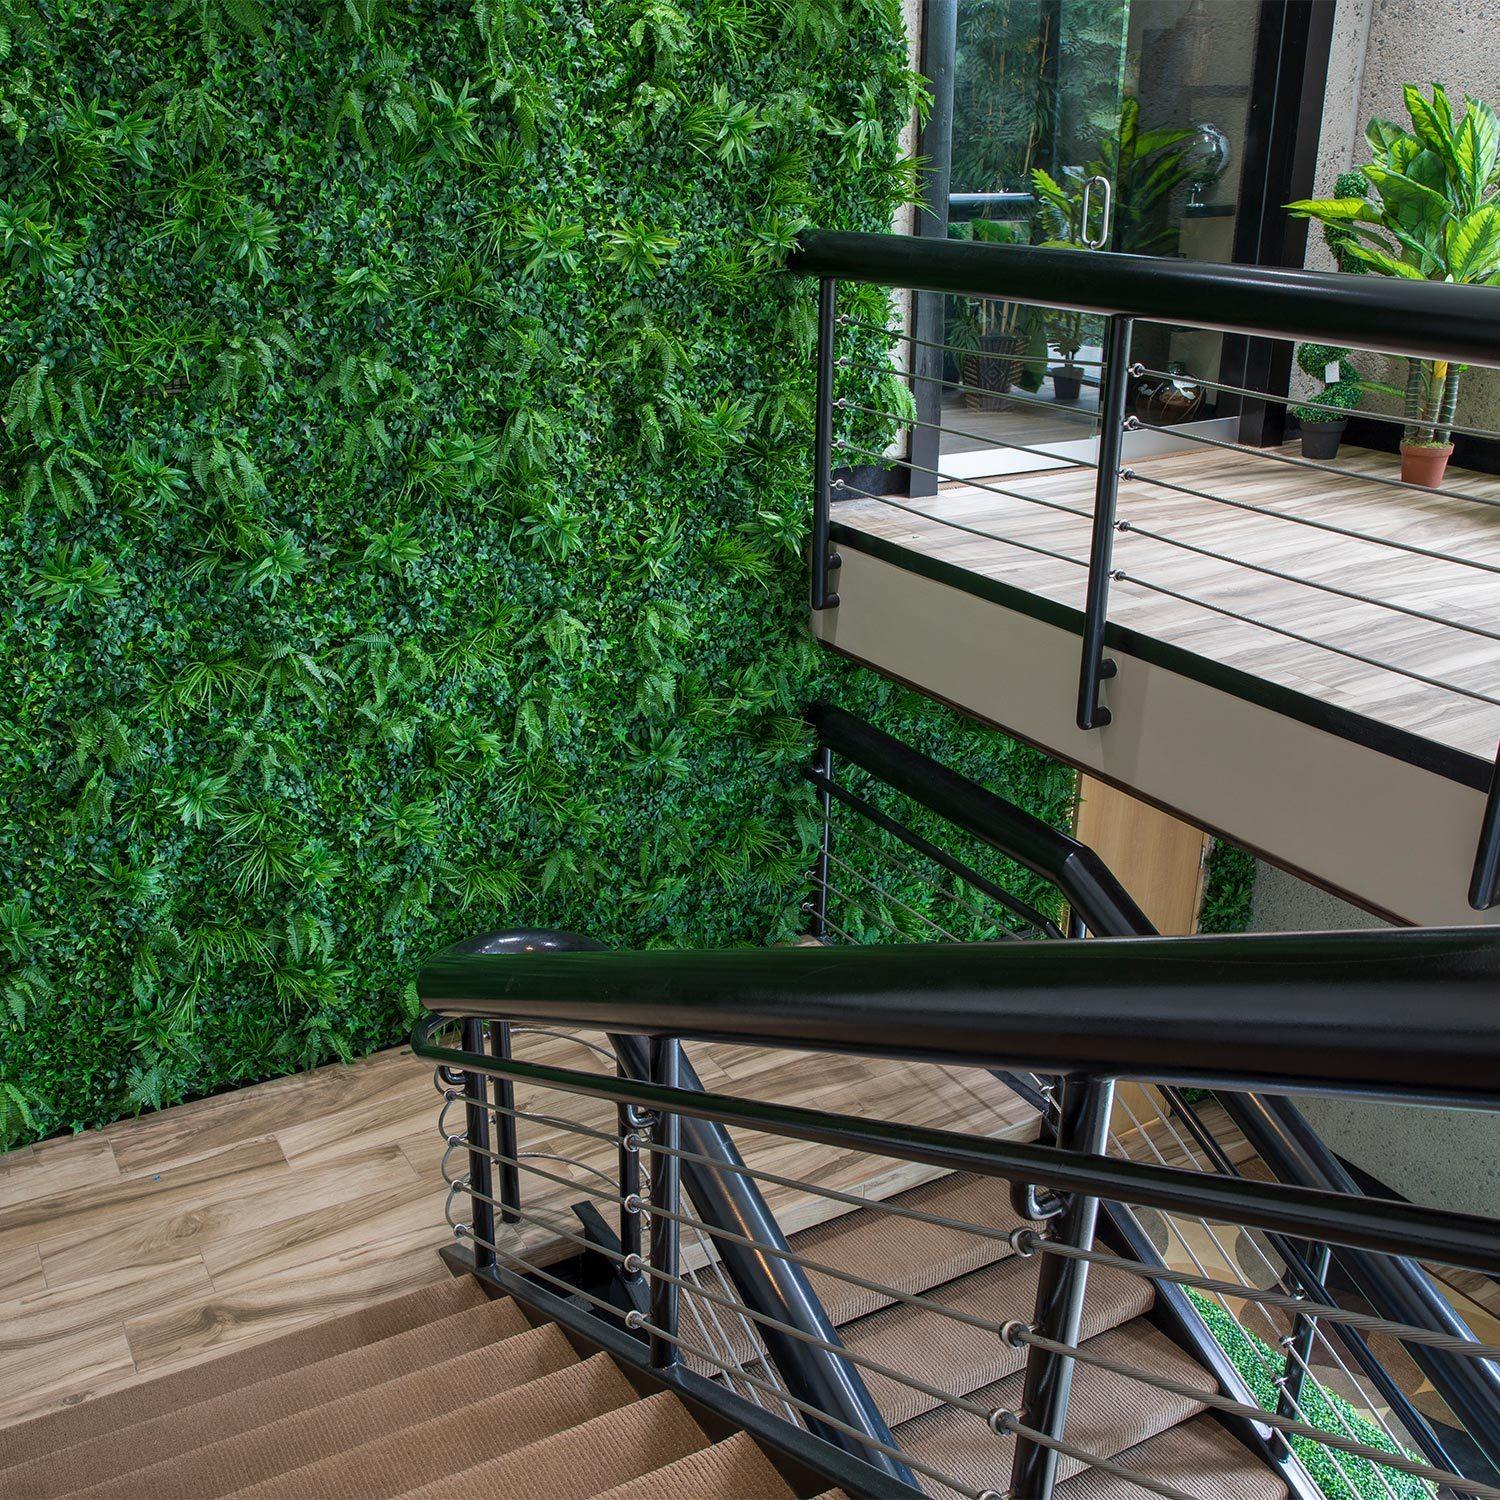 Artificial Rainforest Living Wall - Natrahedge